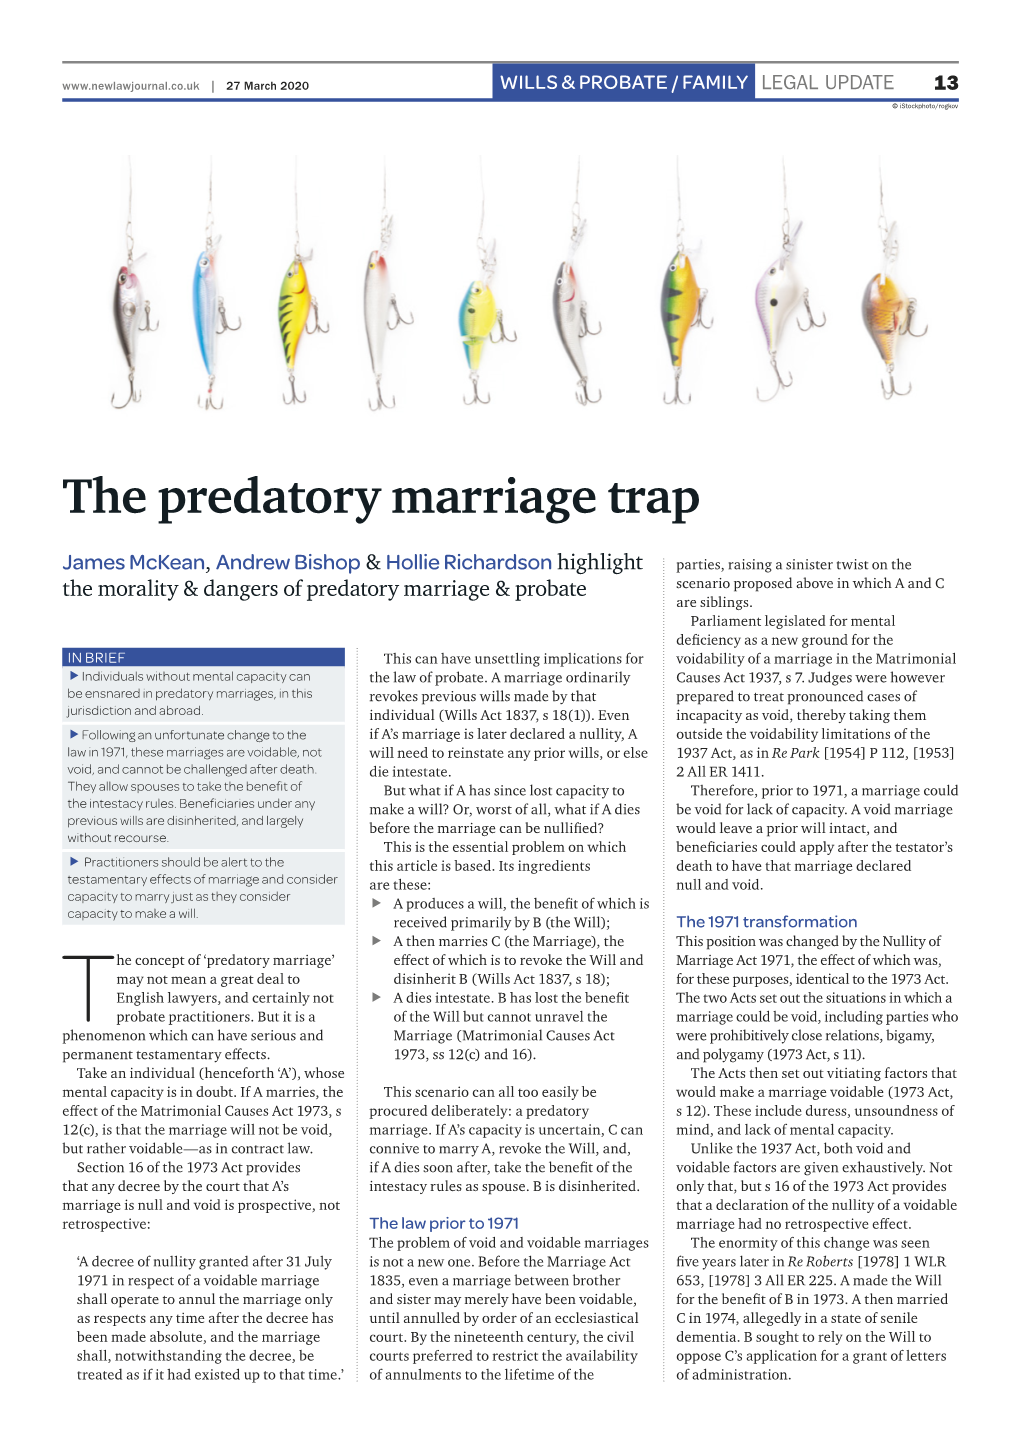 The Predatory Marriage Trap